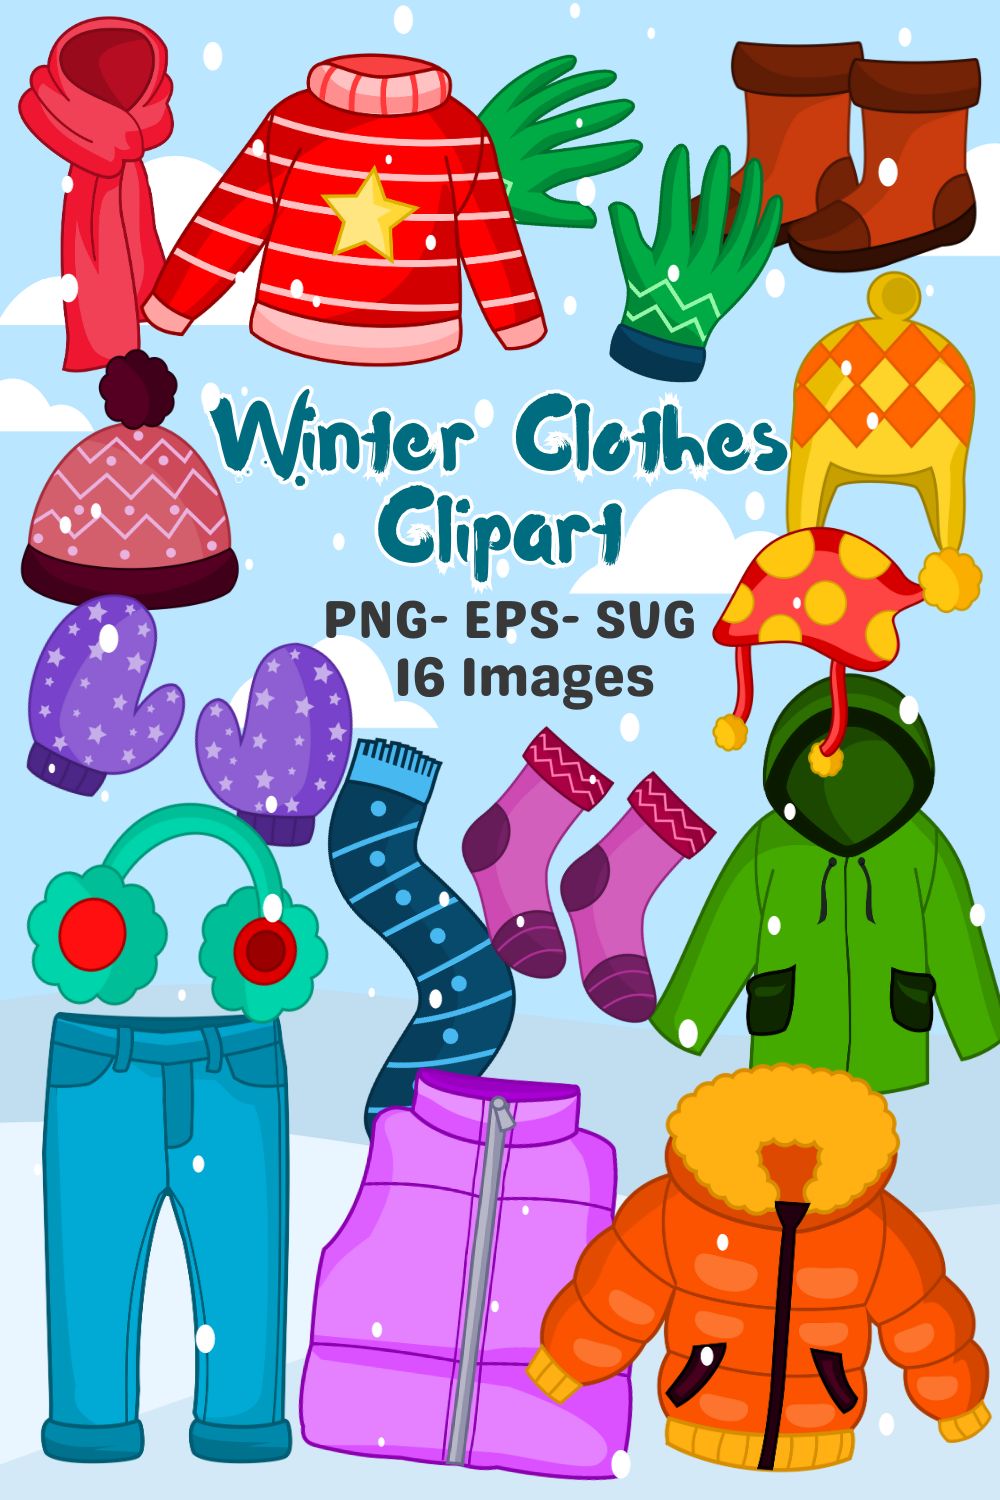 Warm Winter Clothes Clipart Set pinterest preview image.